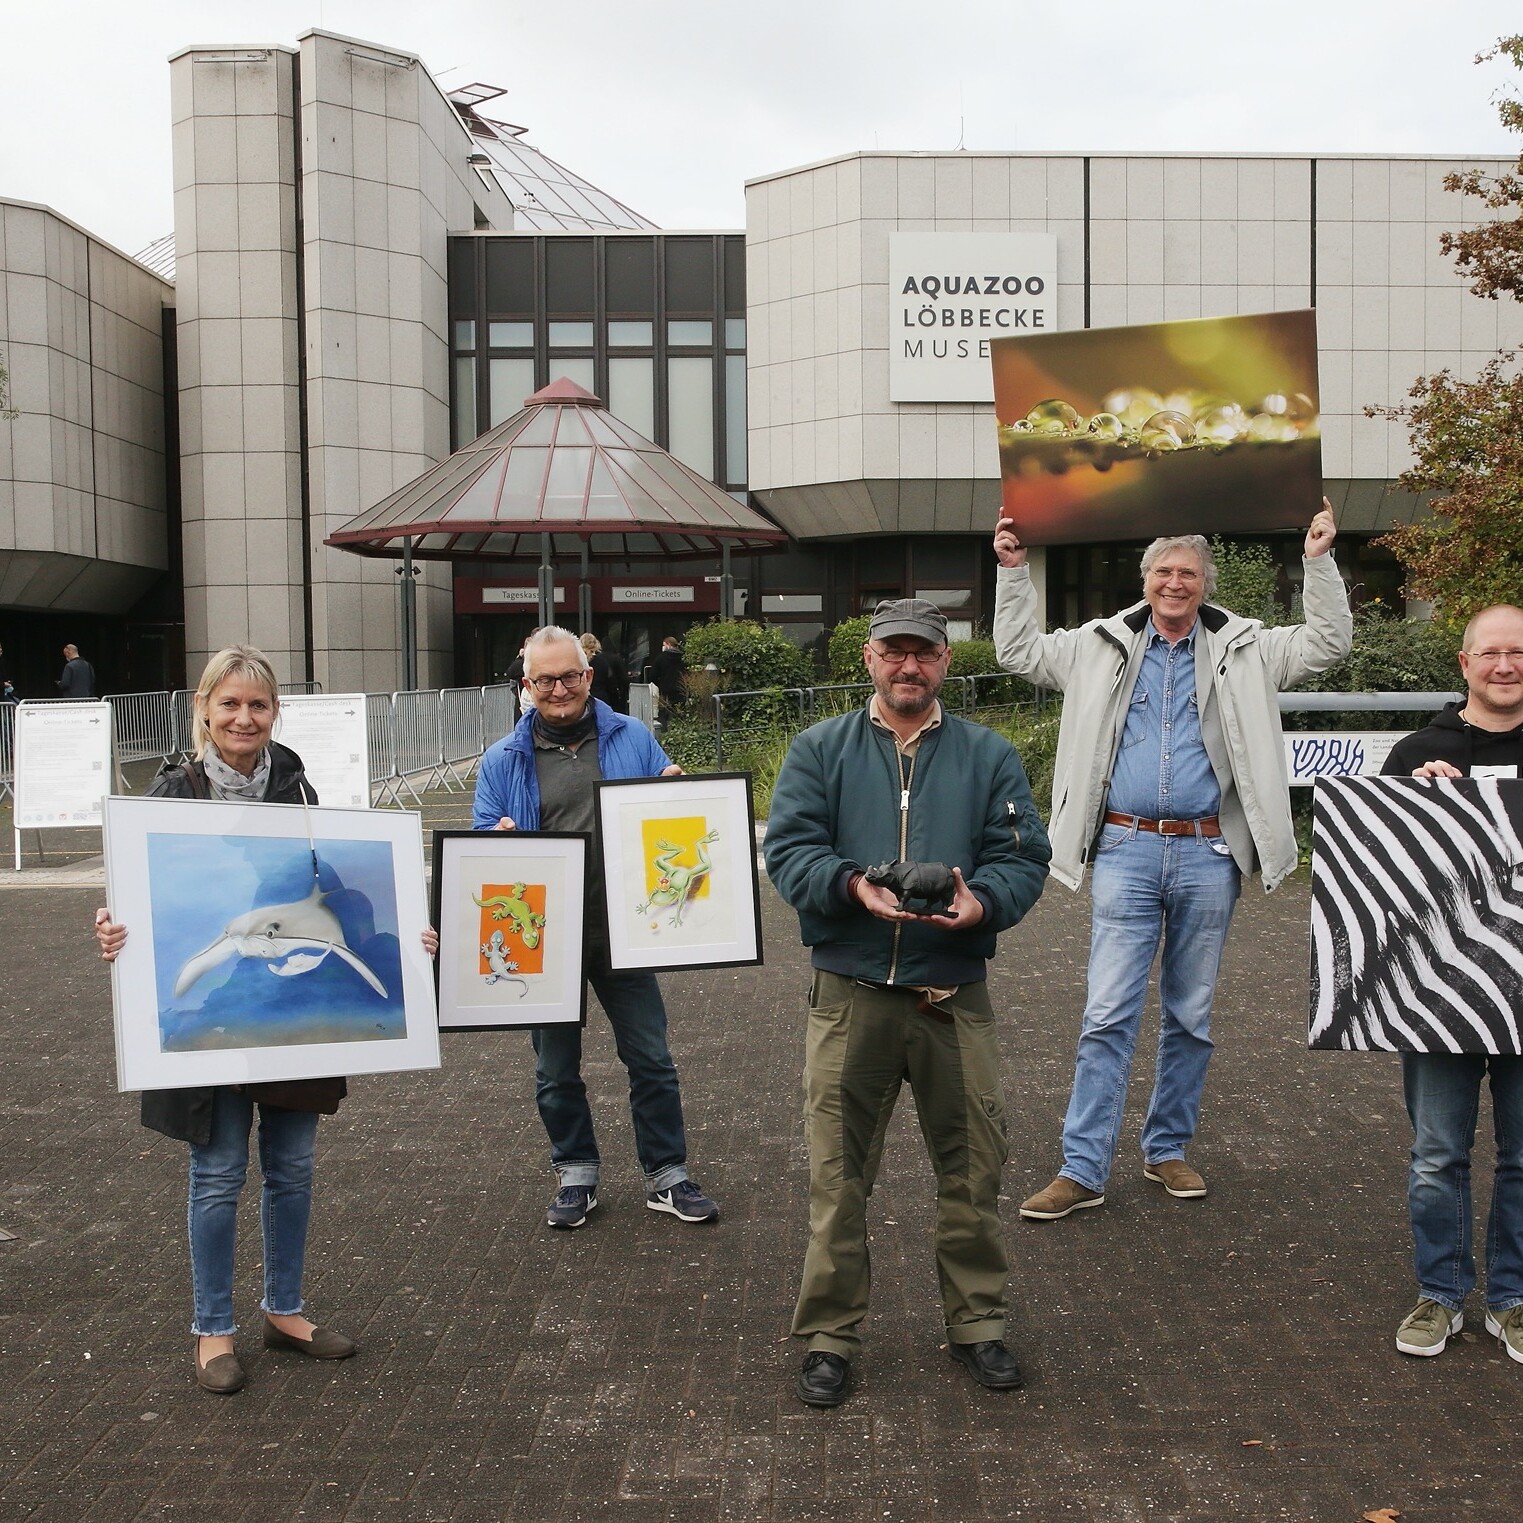 Aquazoo Team uai, , "Artists for our Nature": Kunst für den Artenschutz im Aquazoo Löbbecke Museum